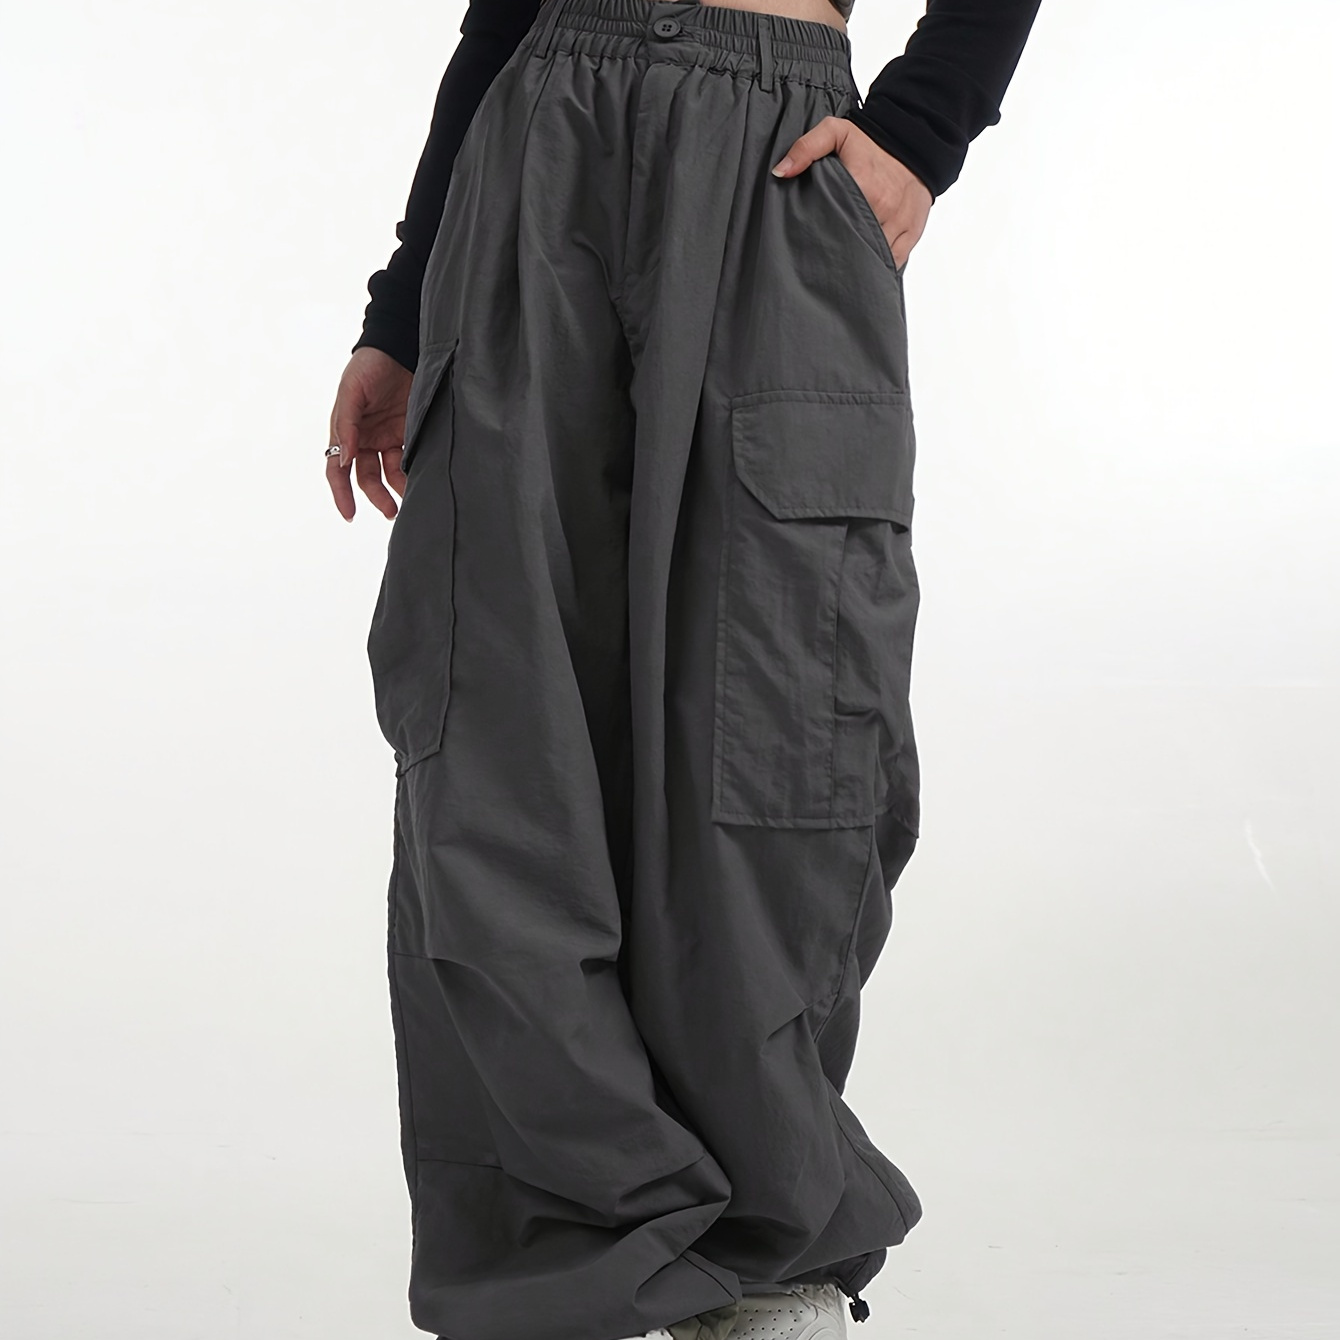 

Slant Pockets Straight Leg Cargo Pants, Casual High Waist Pants For Spring & Fall, Women's Clothing